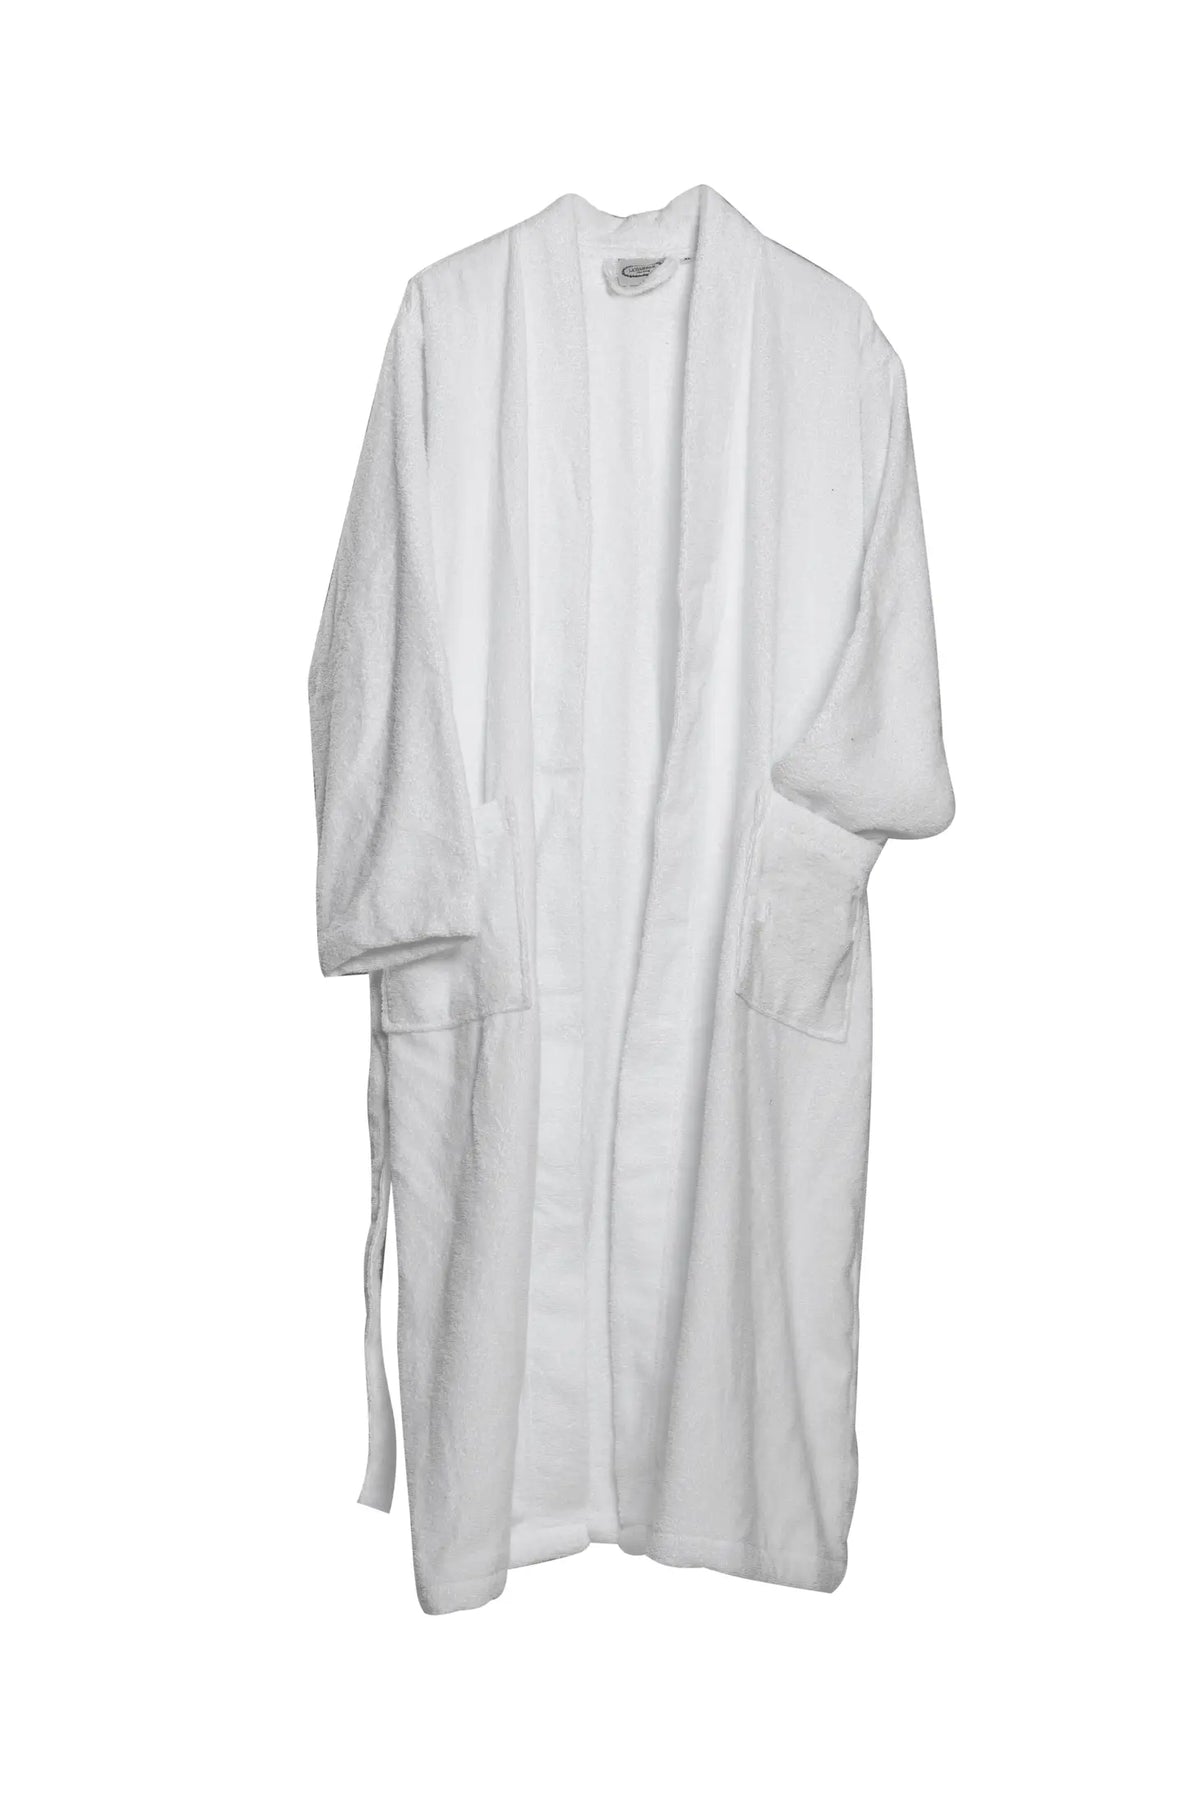 700 GSM Cotton Ultra Soft High Quality White Robe 5 Case Box